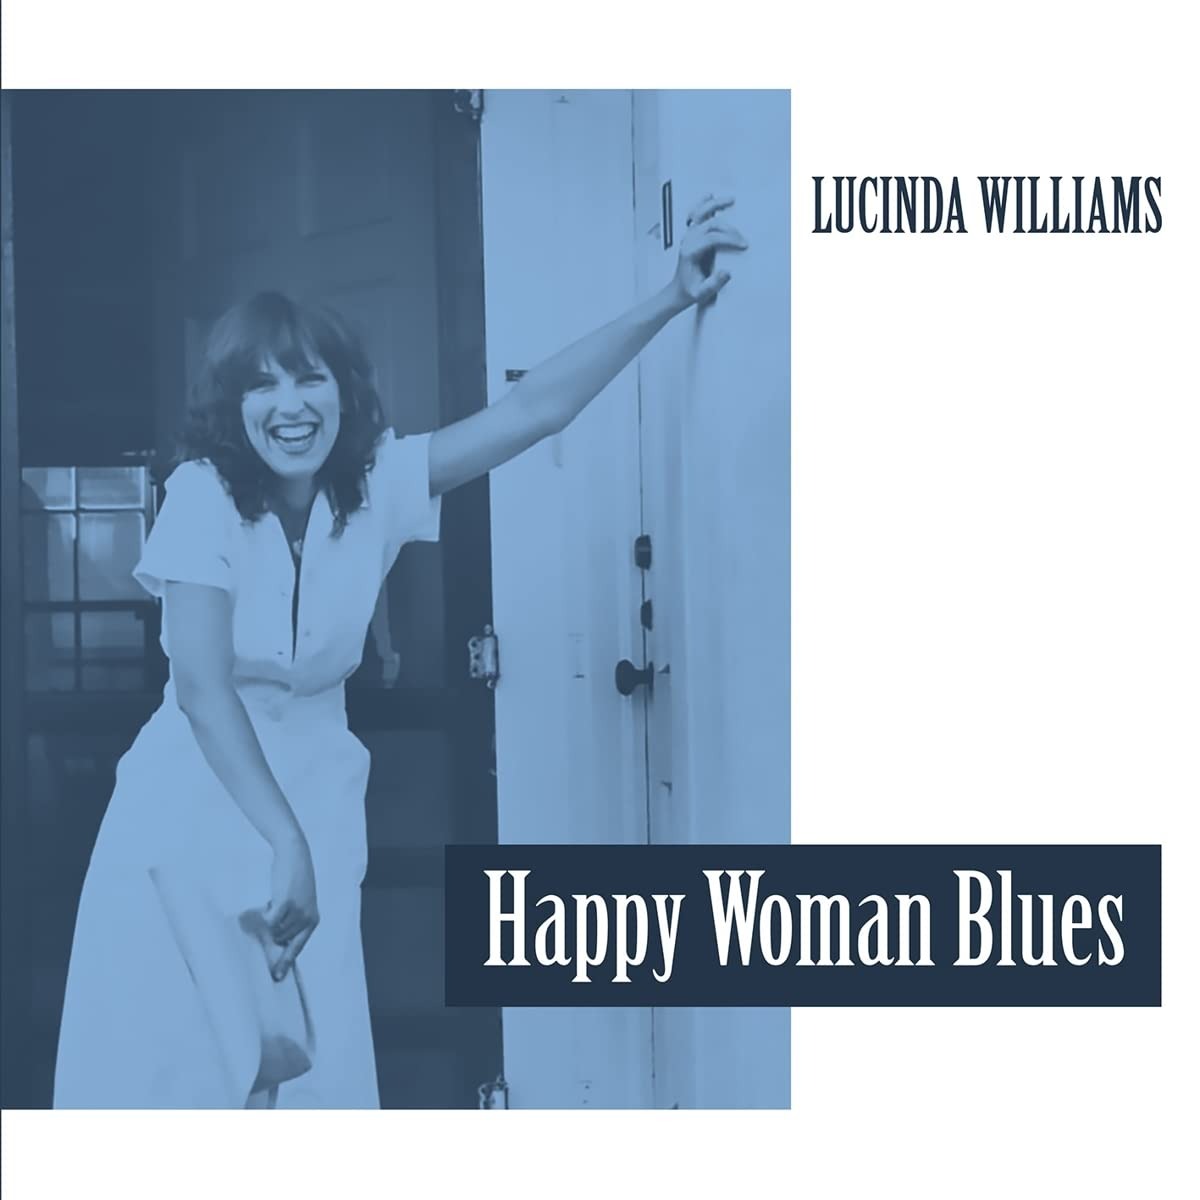 Lucinda Williams - Happy Woman Blues LP (Clear Vinyl)